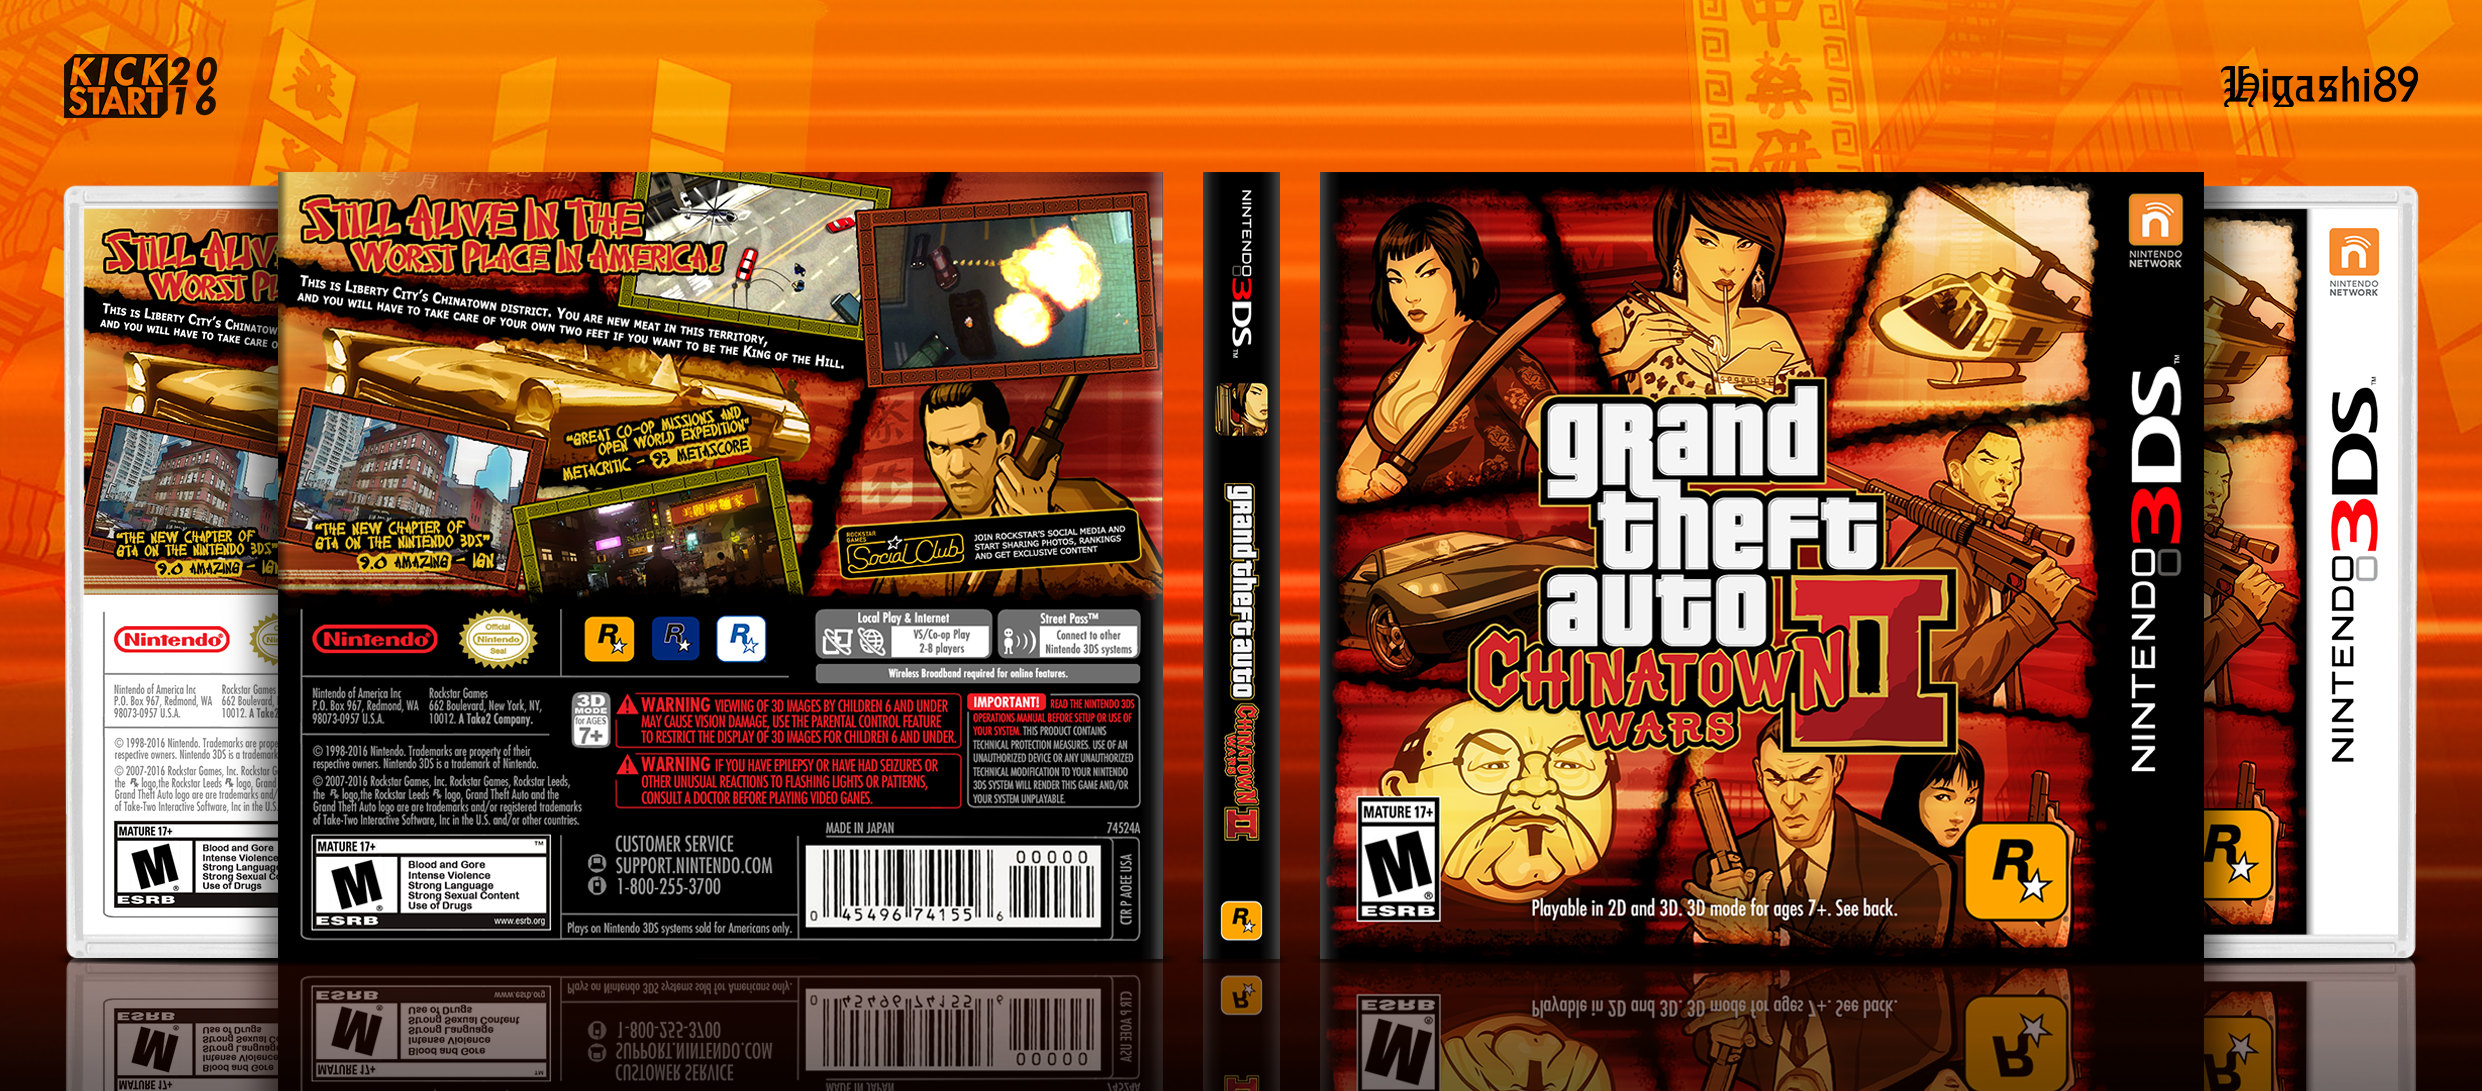 Grand Theft Auto: Chinatown Wars II box cover